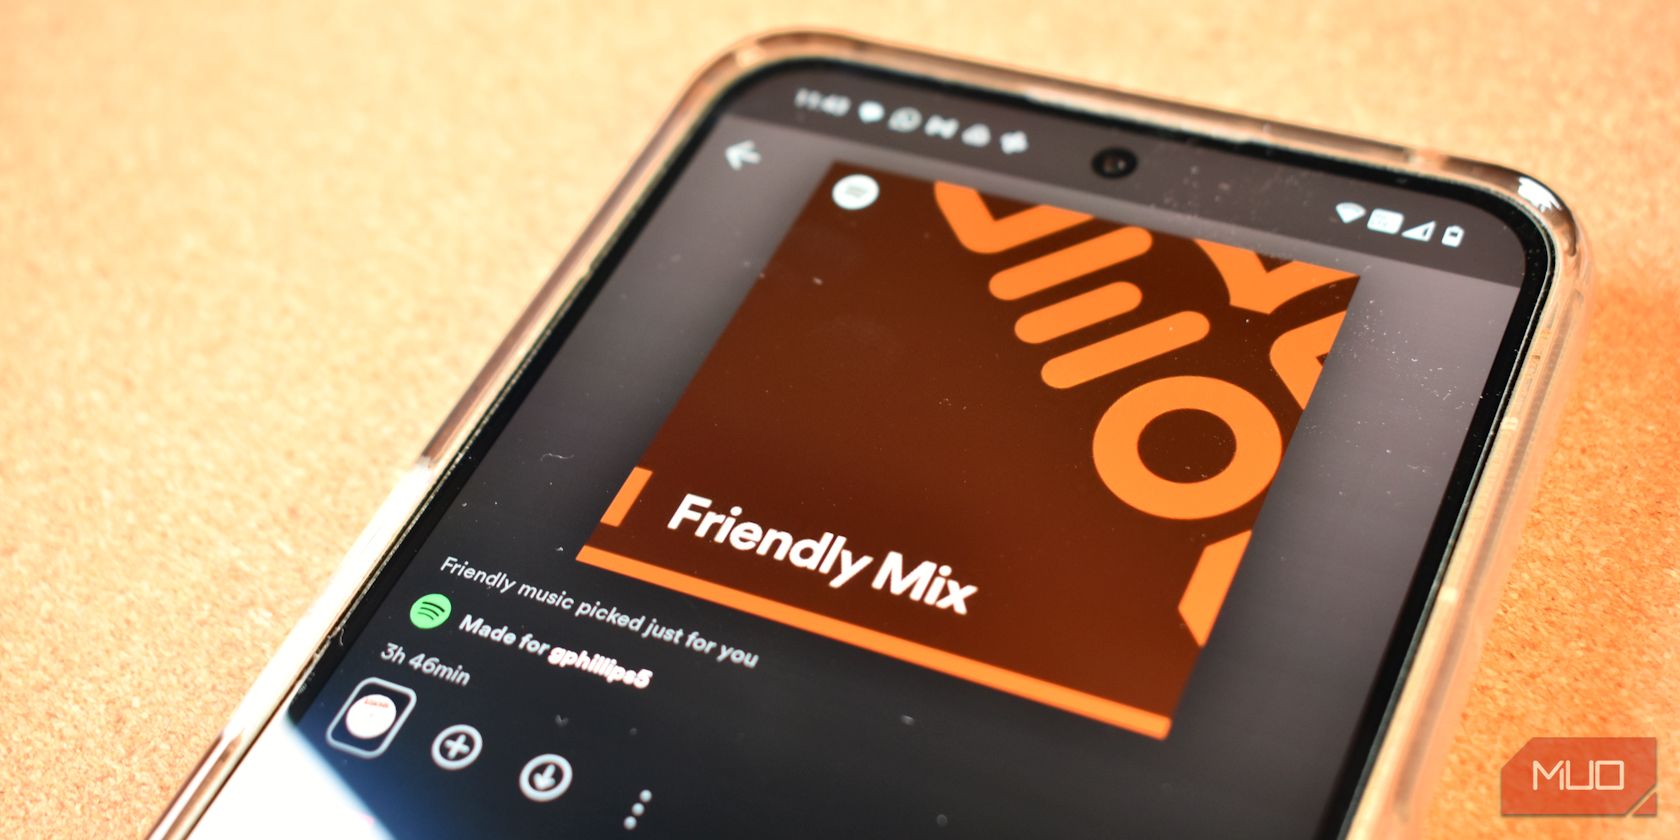 spotify friendly mix playlist on smartphone screen